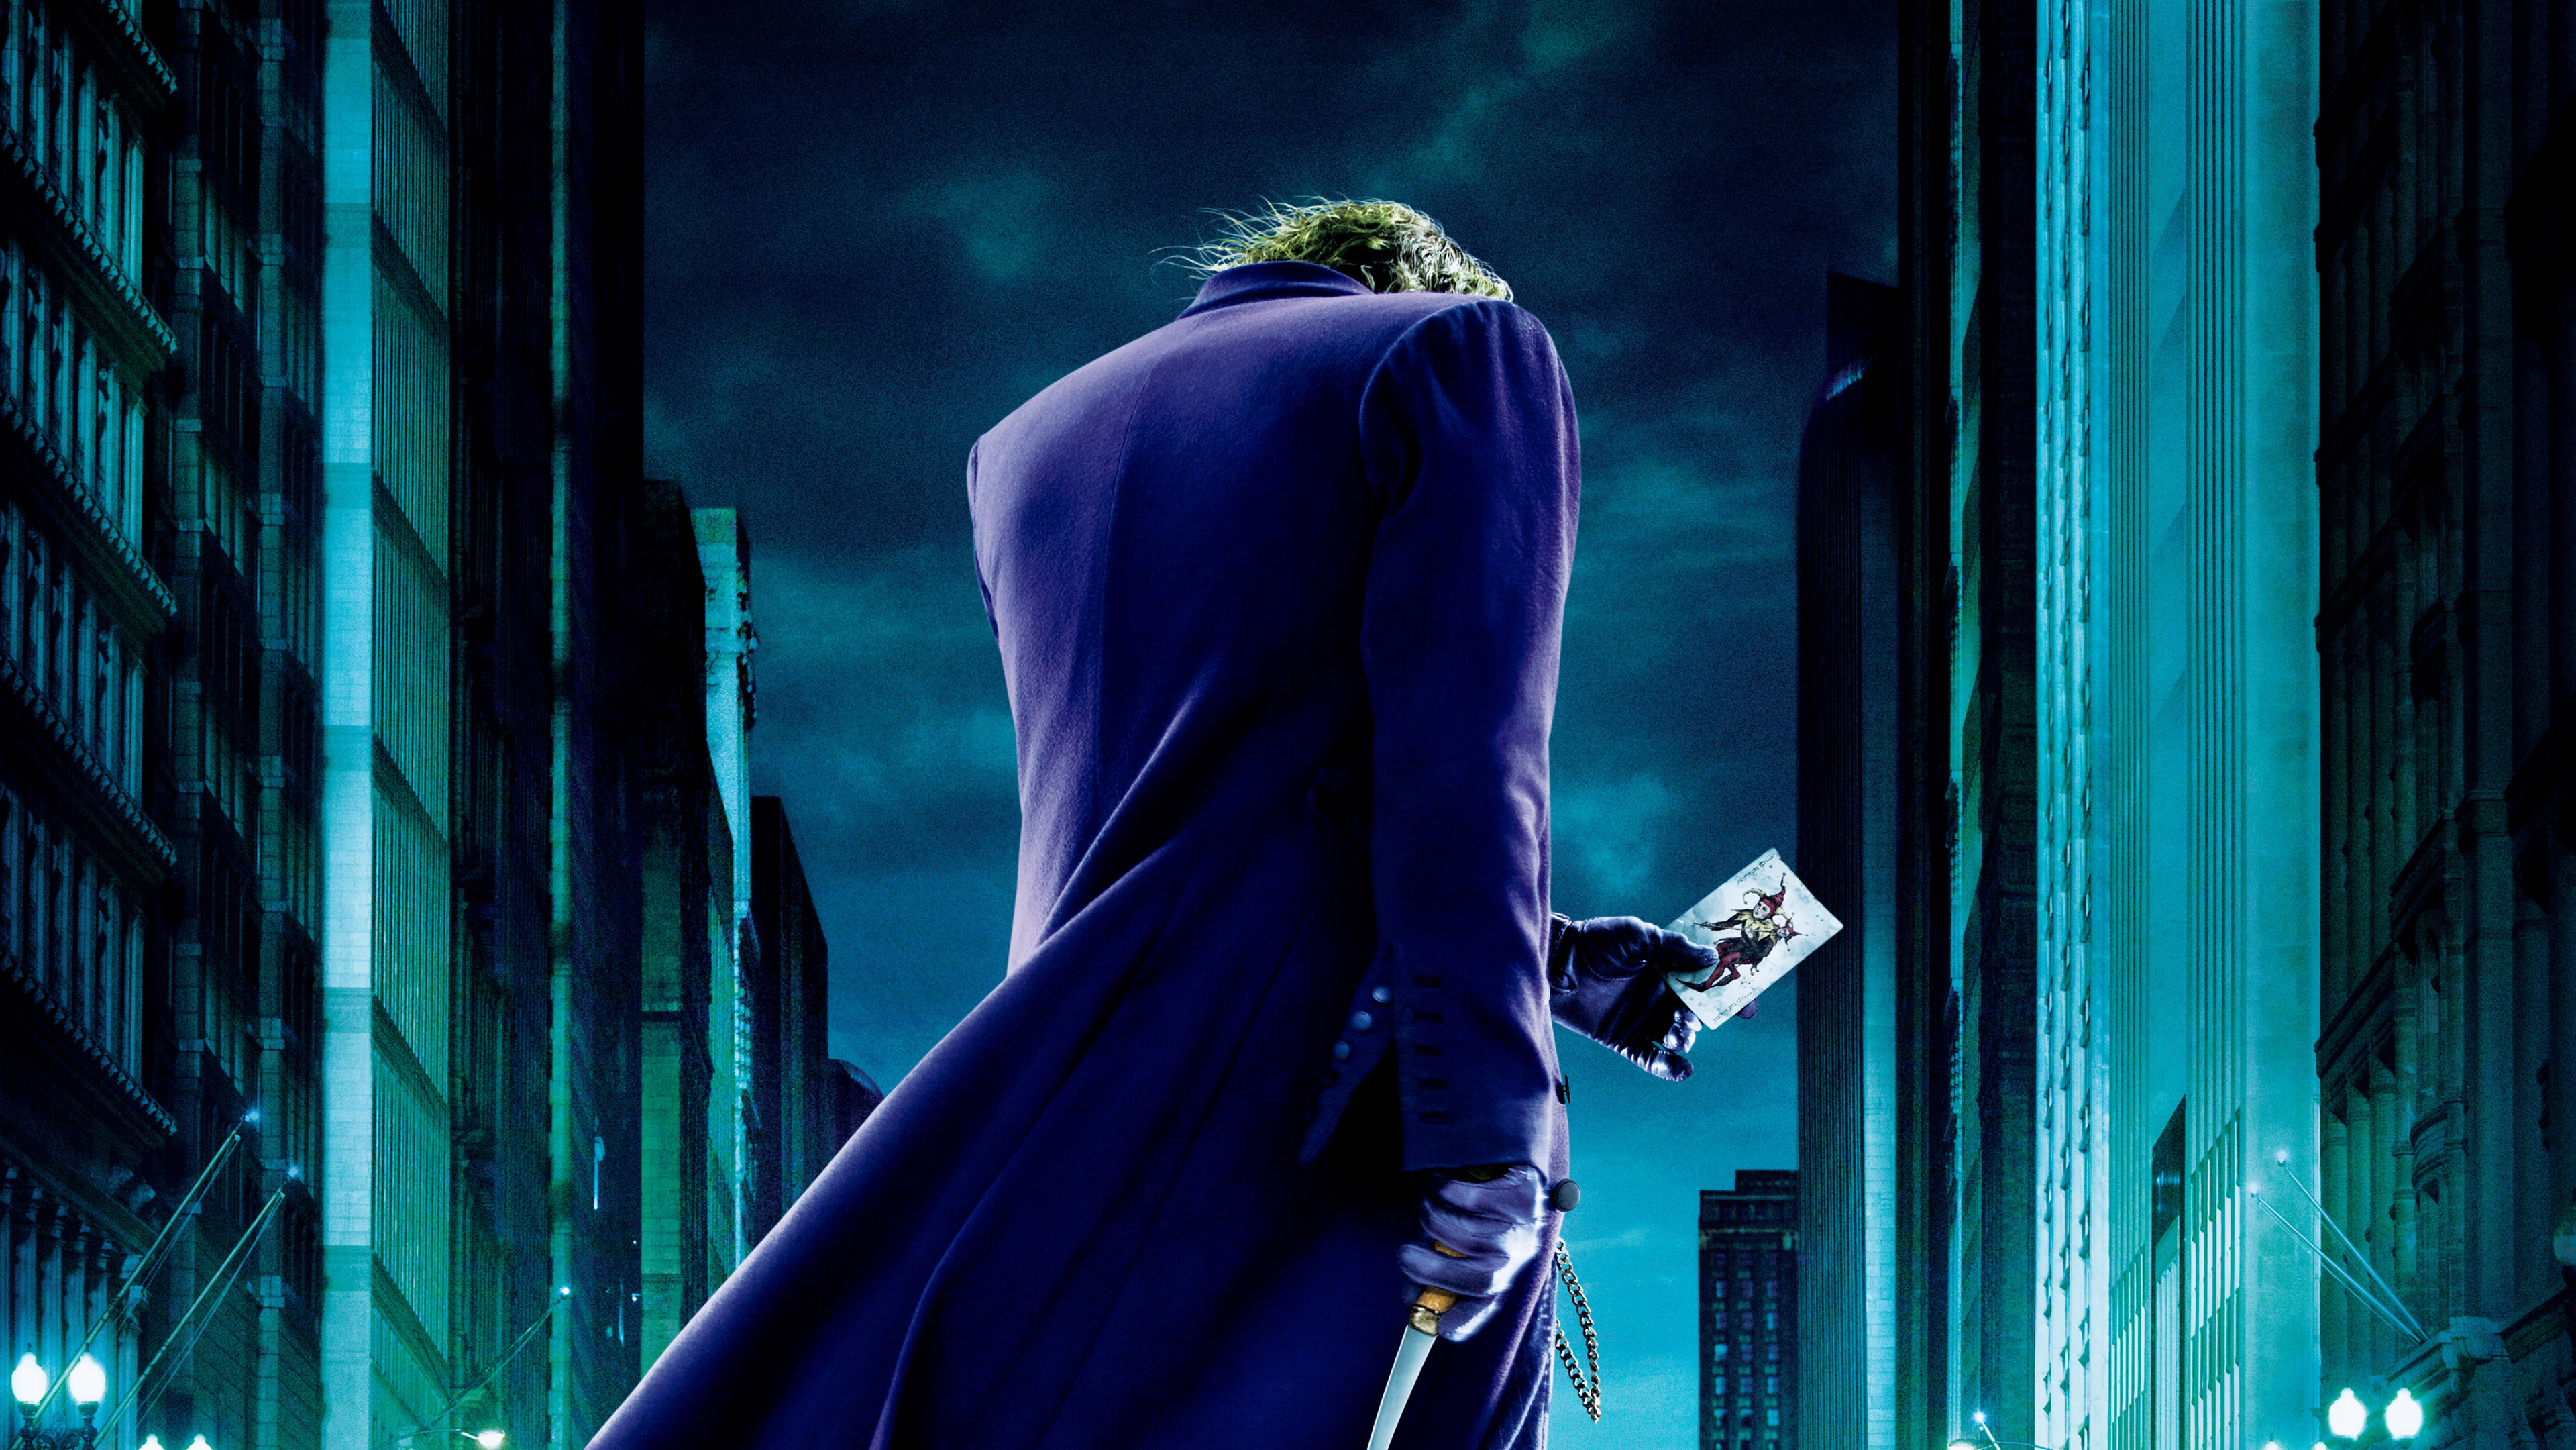 Joker The Dark Knight 4k, HD Movies, 4k Wallpapers, Images ...